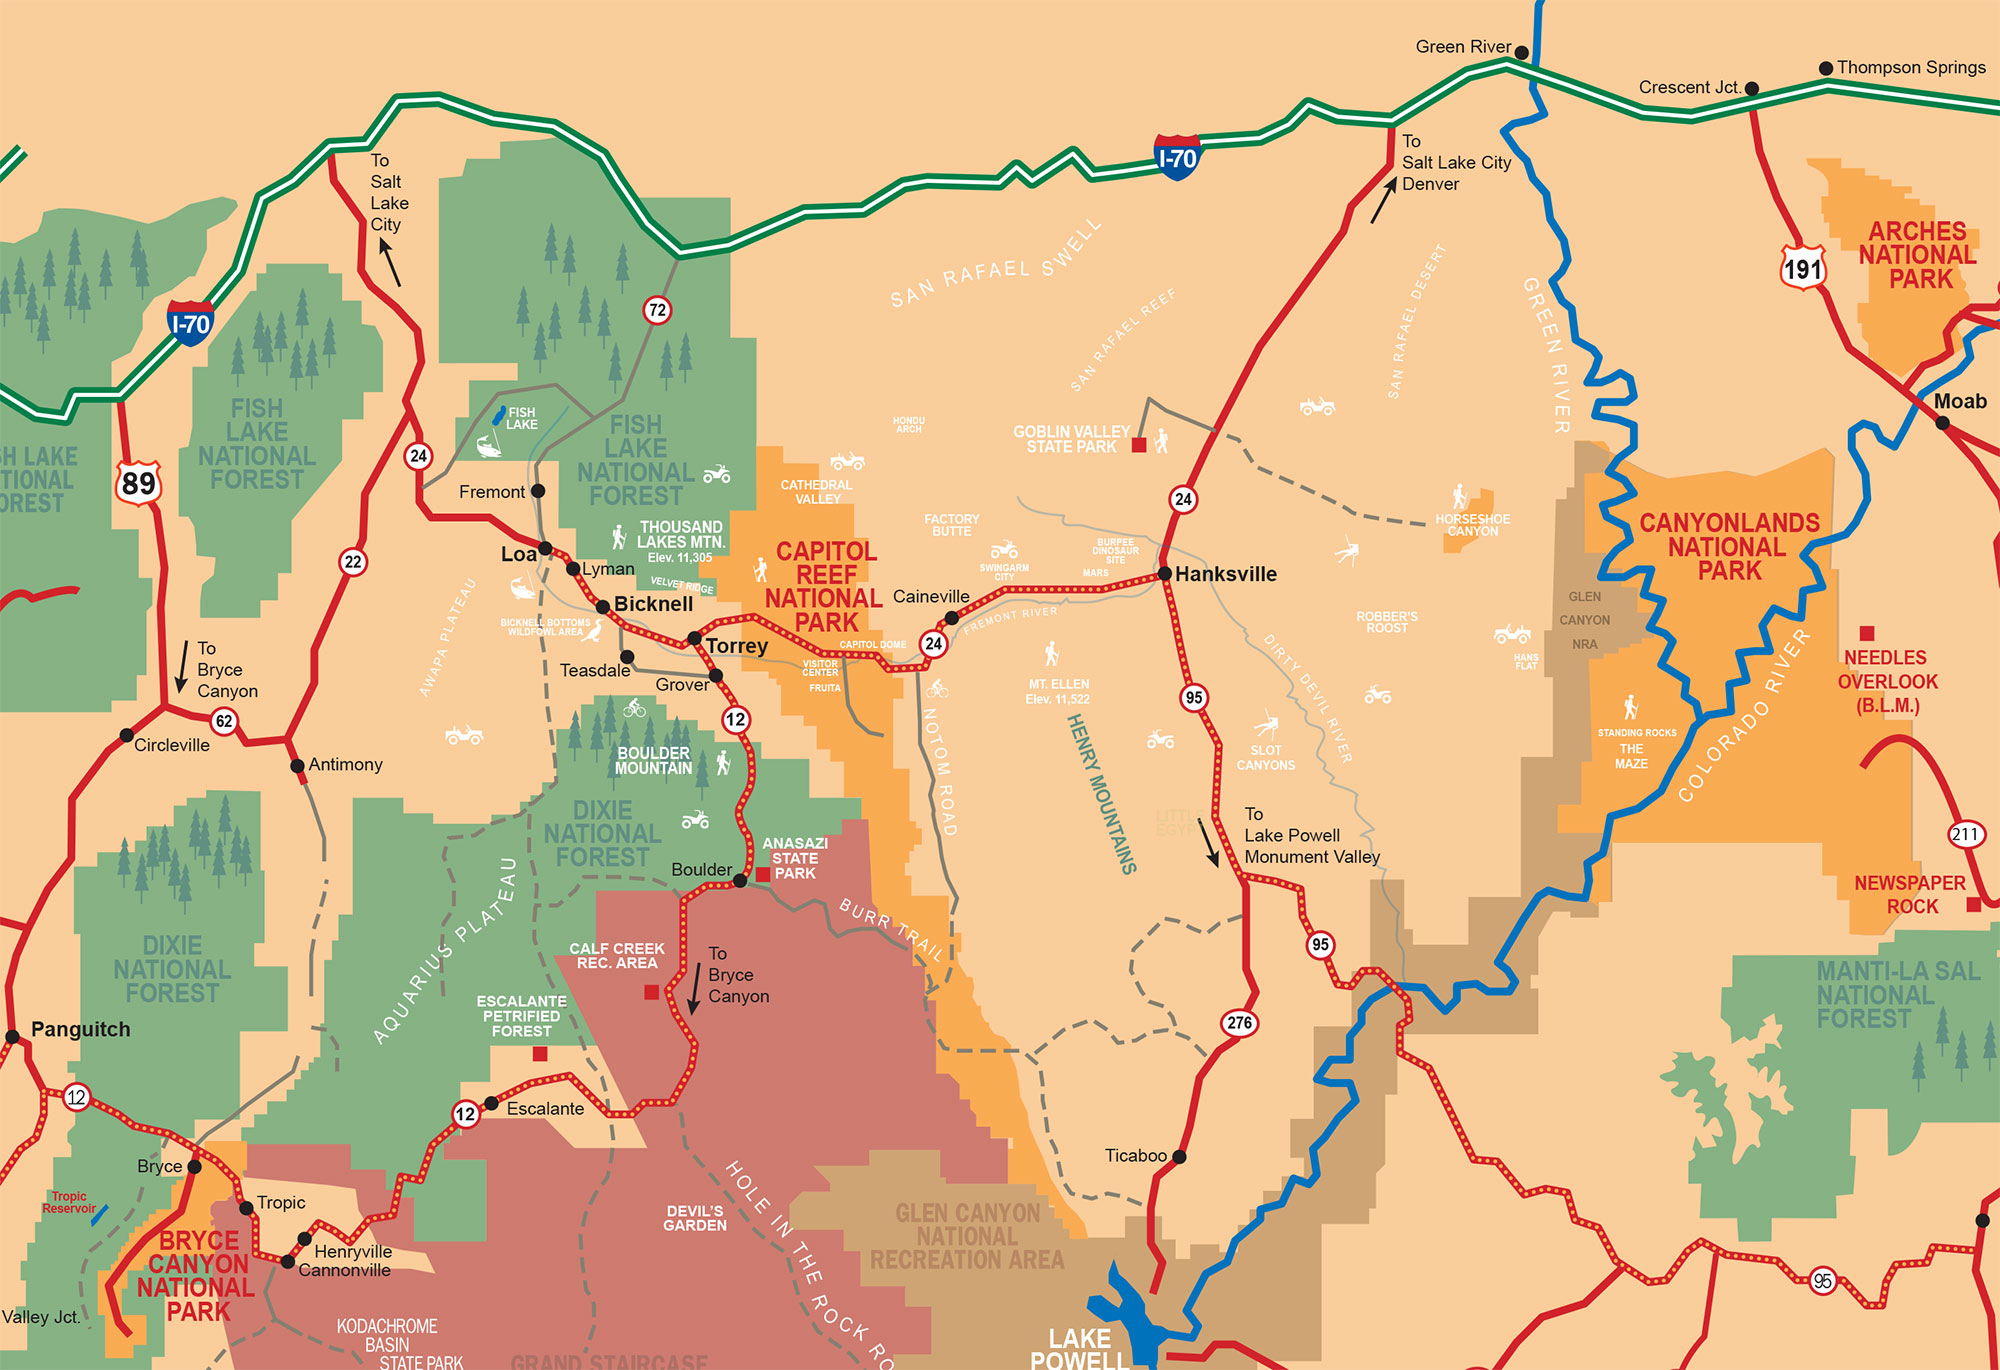 CapitolReef-Area-Map-2000x1370pix